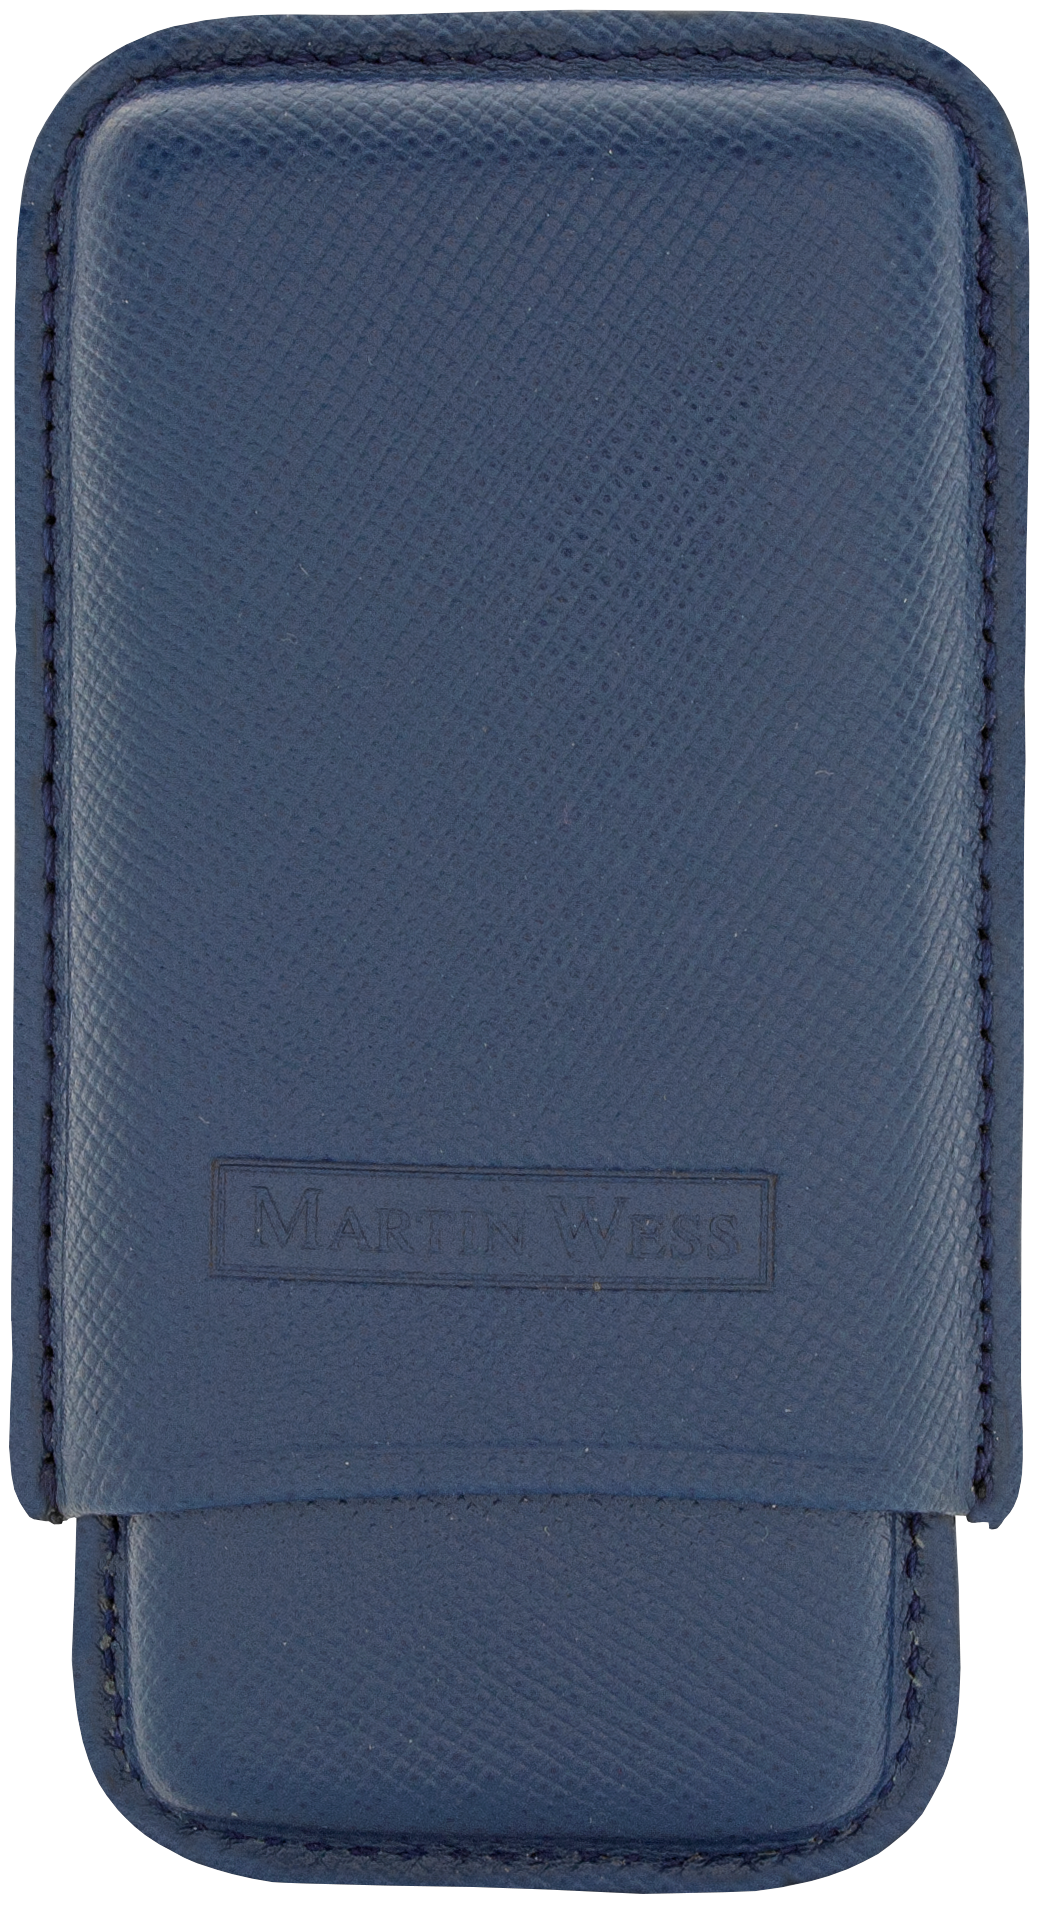 Martin Wess 505 Dante Blue - 5 Cigarillos